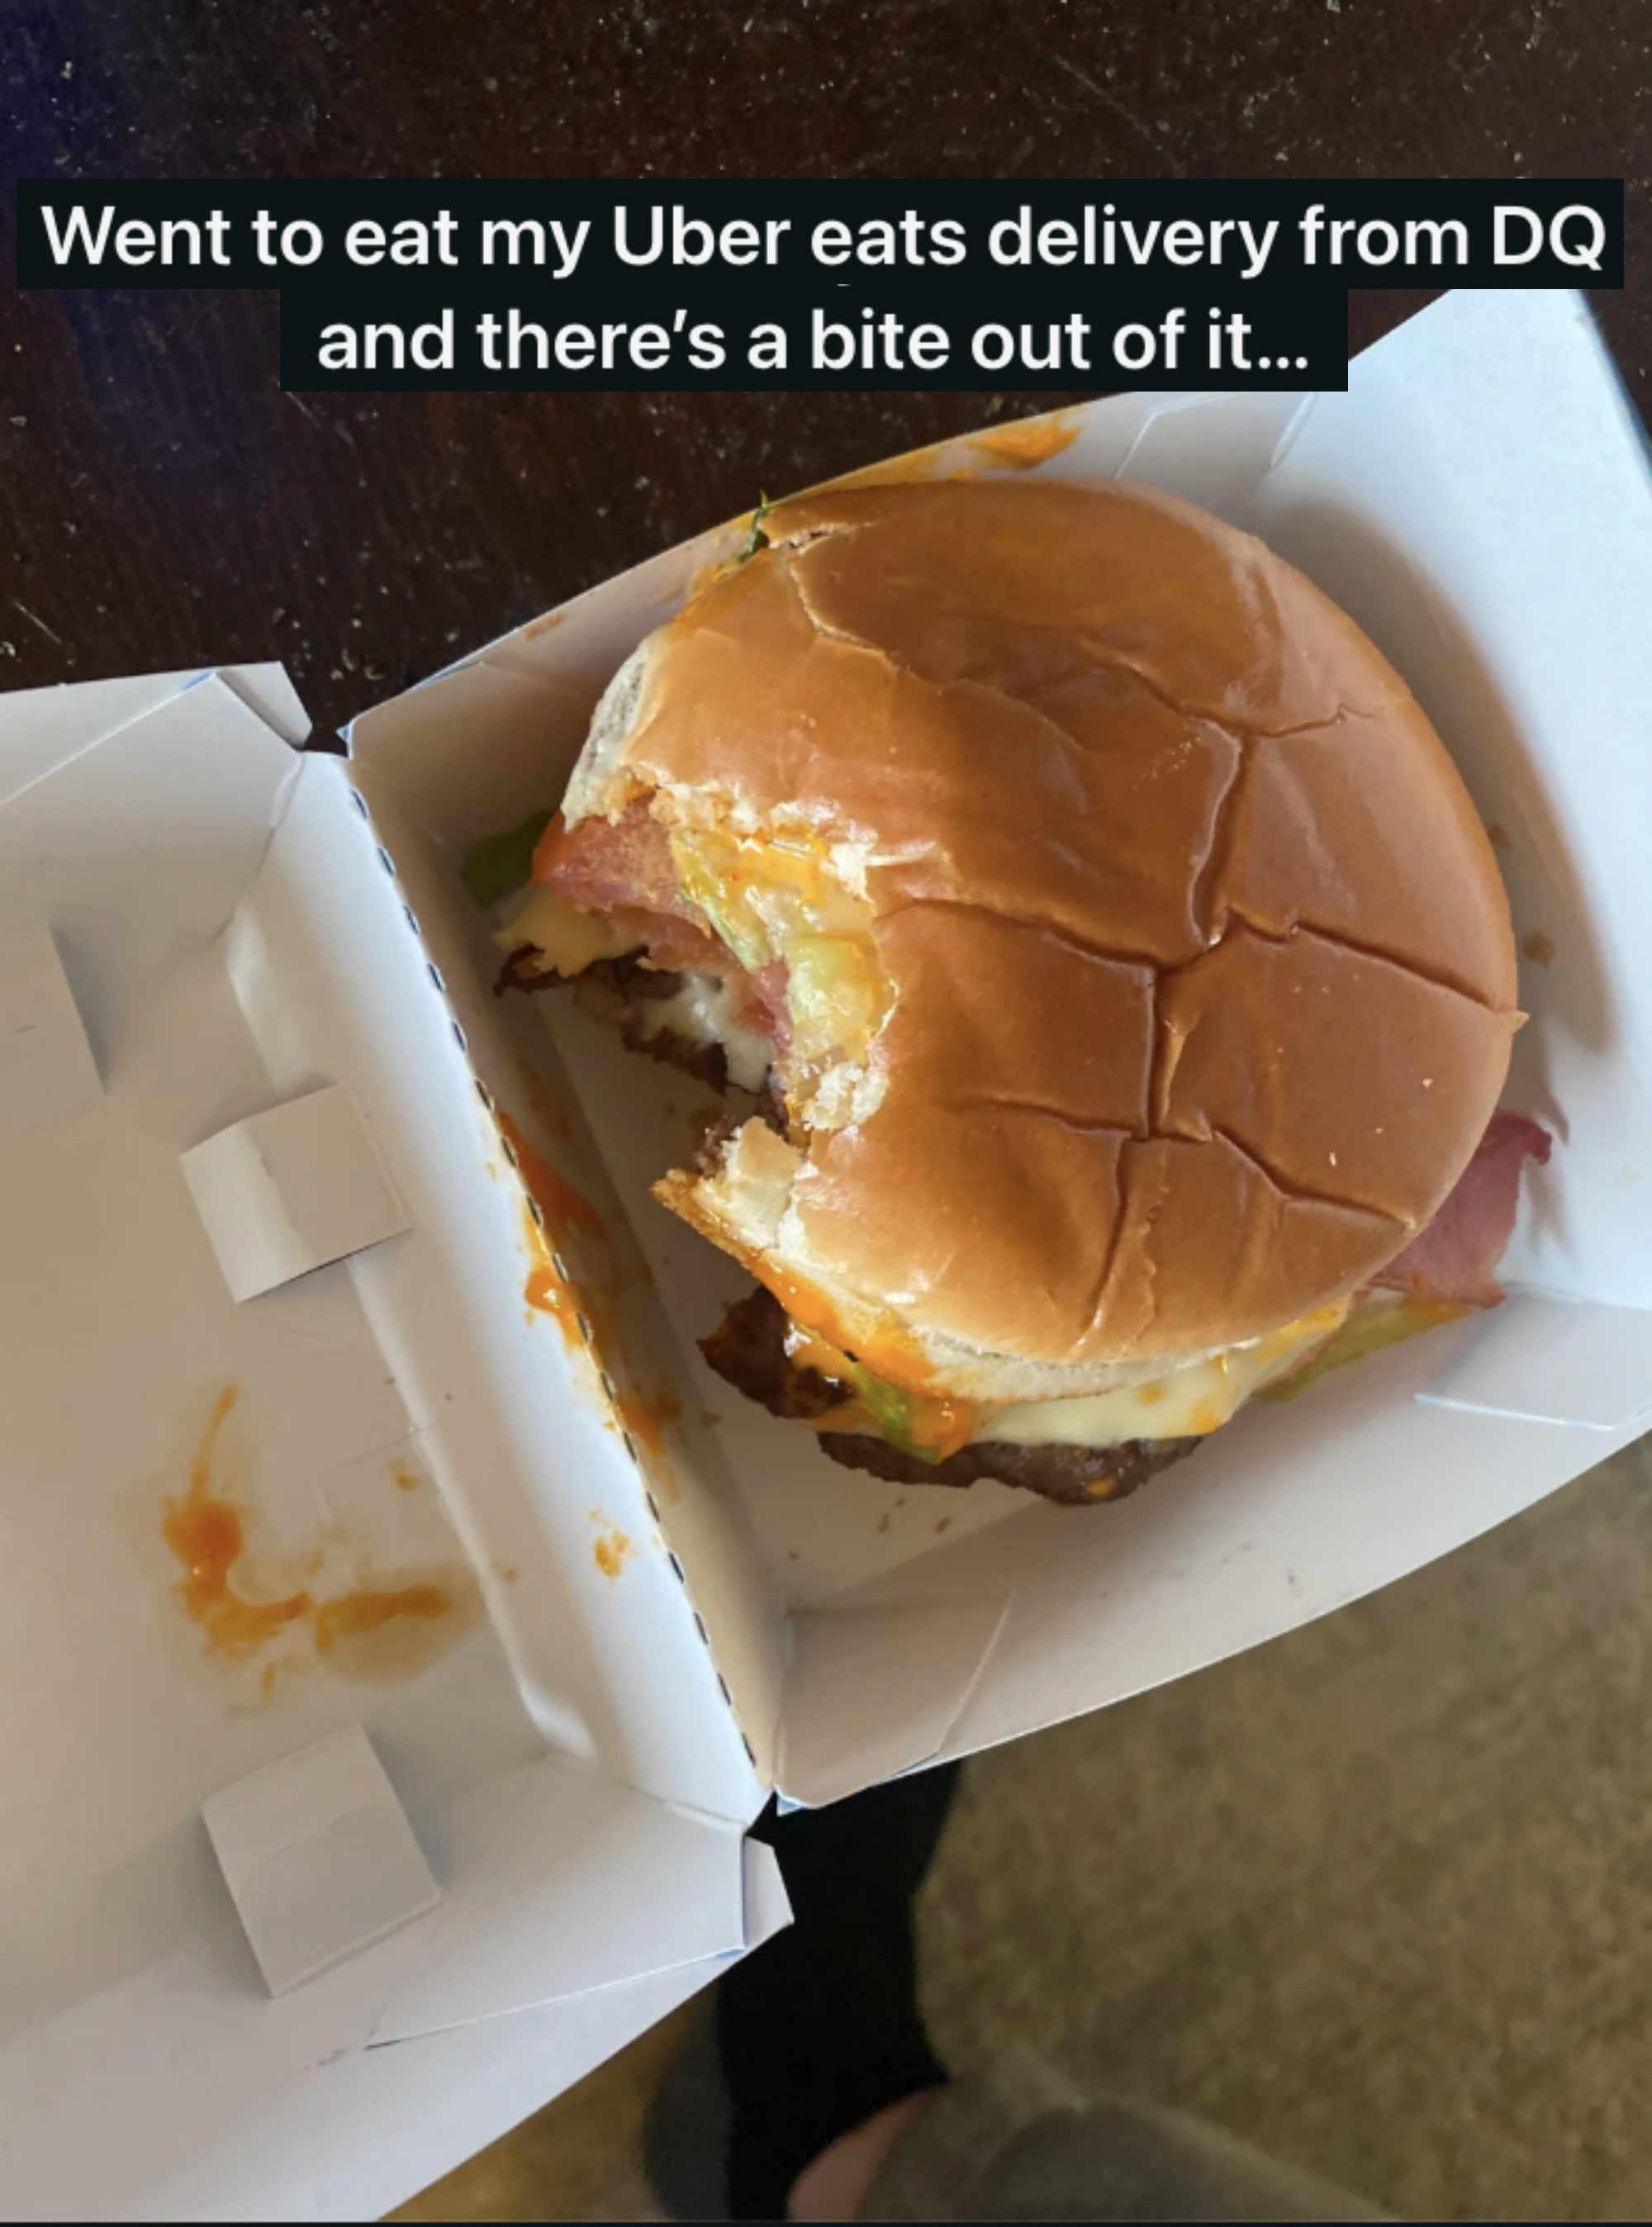 A bite taken out of a burger